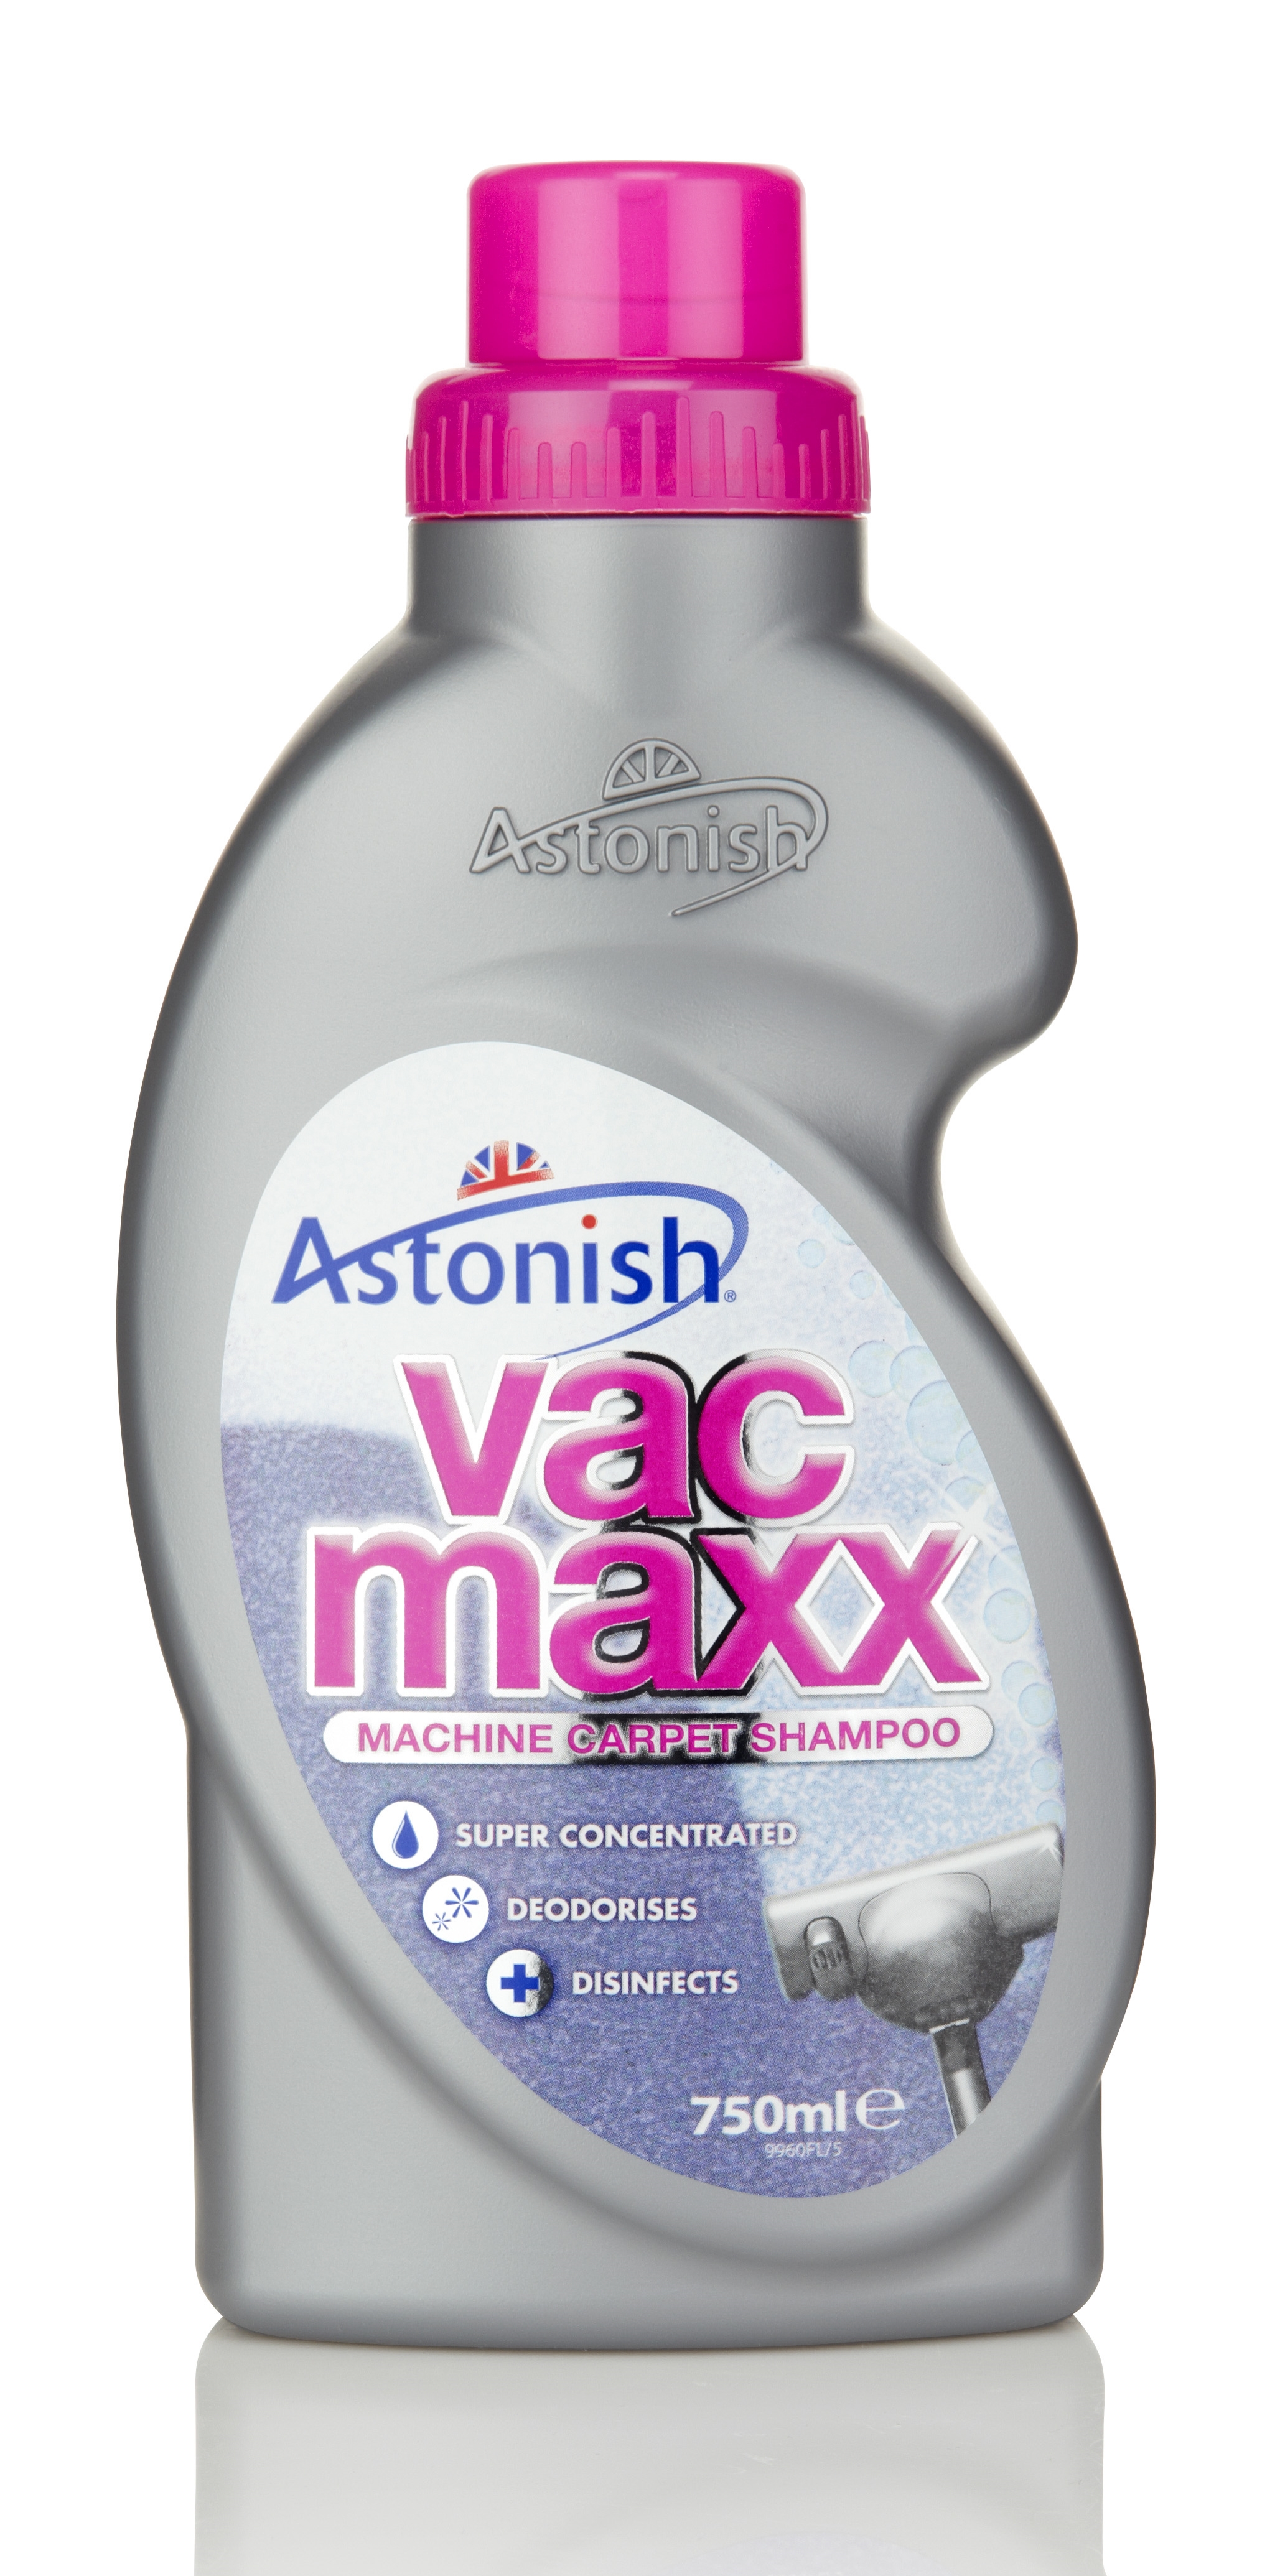 Astonish Vac Maxx Machine Carpet Shampoo 750ml.jpg